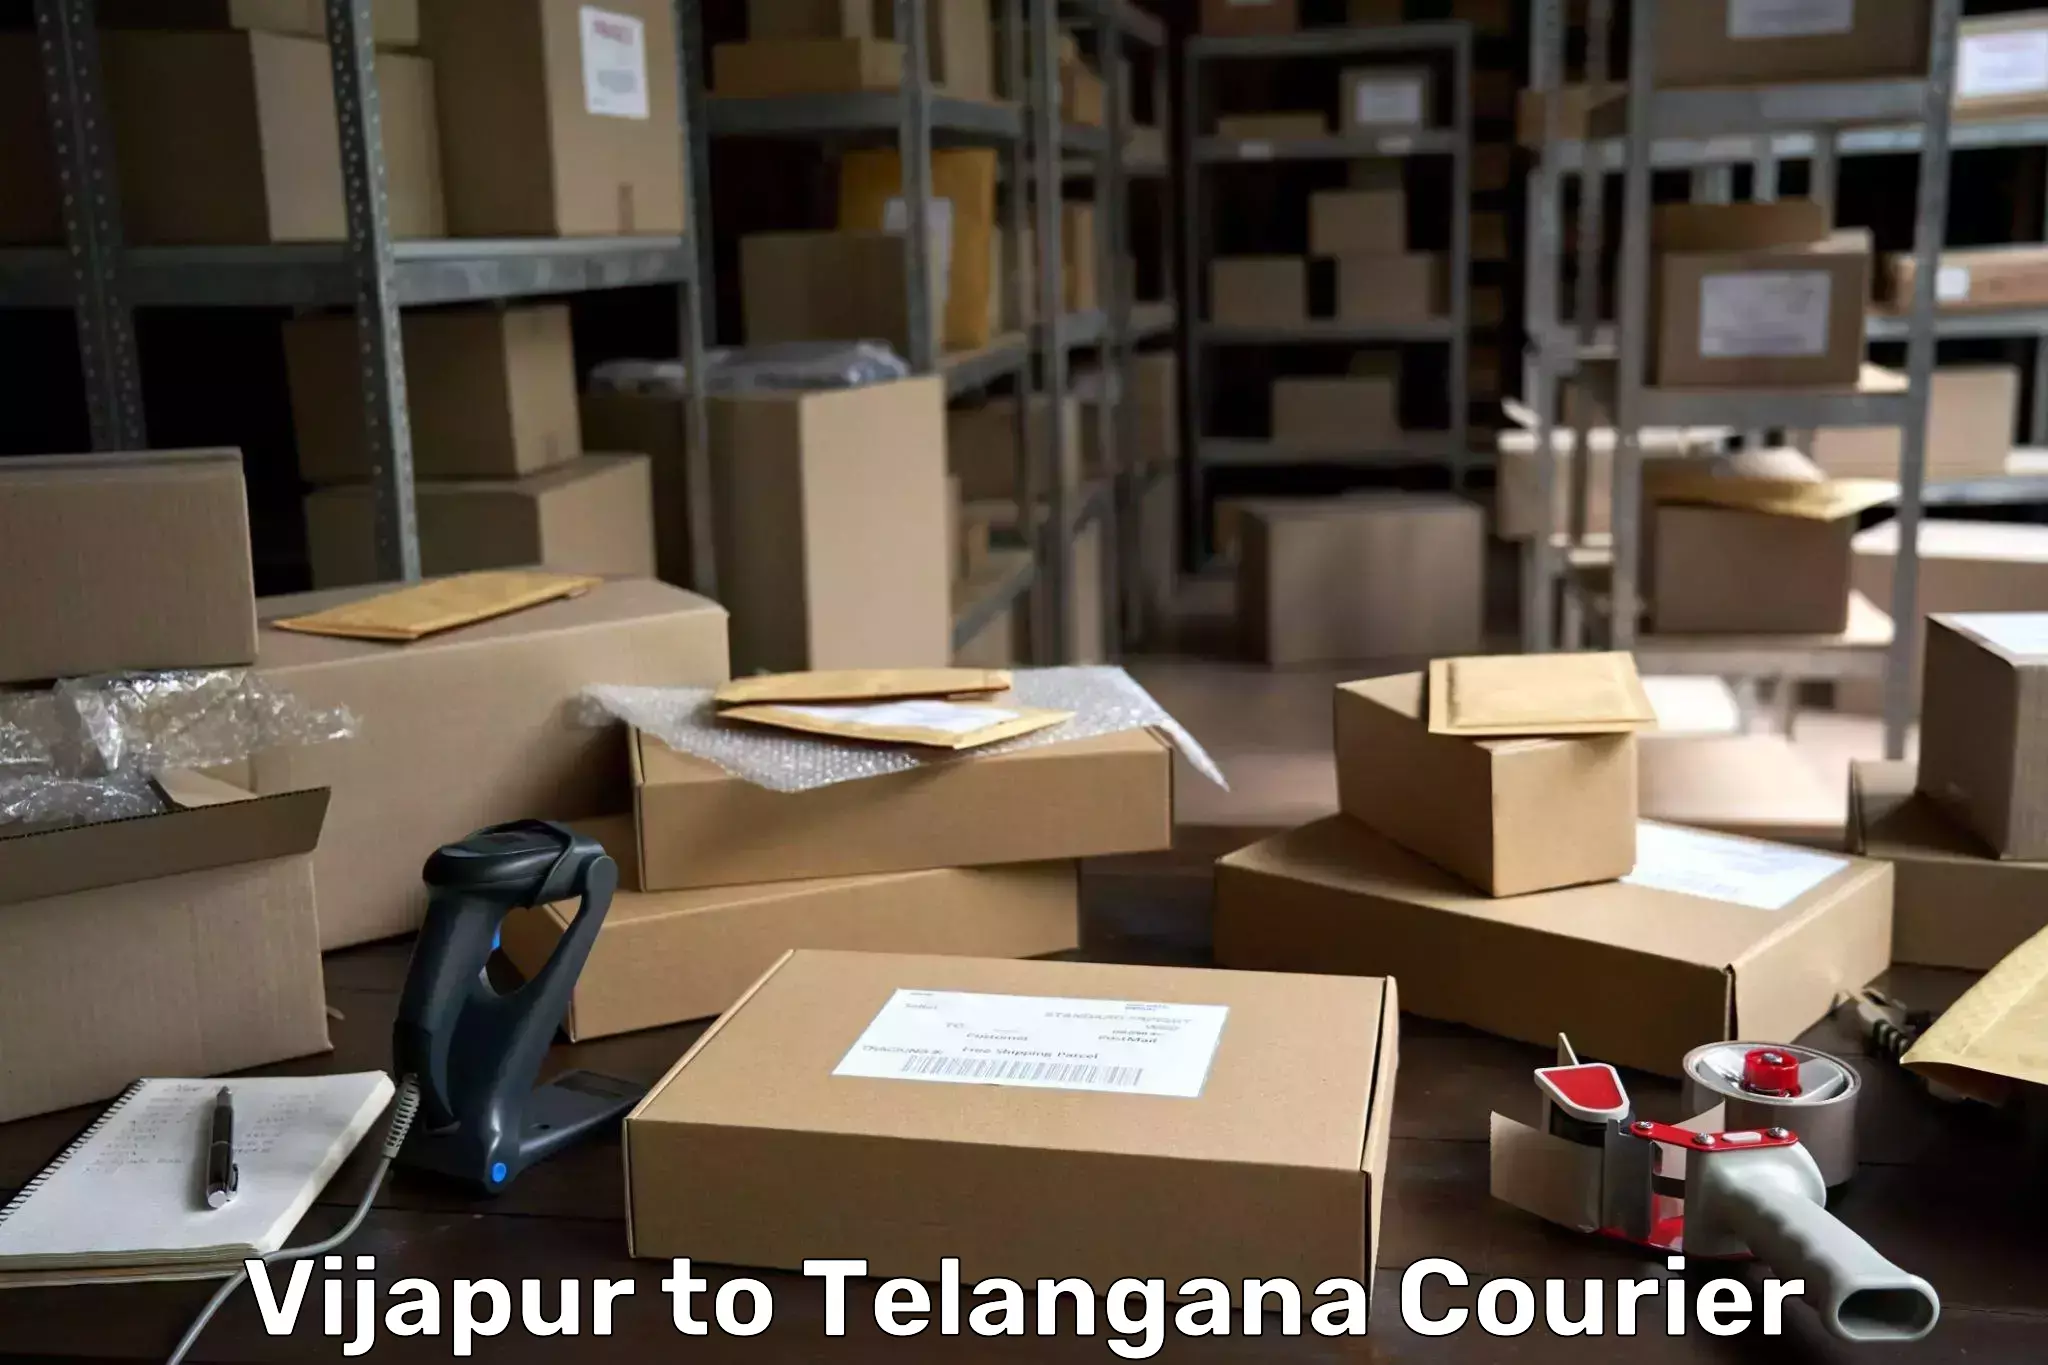 Courier service comparison Vijapur to Telangana